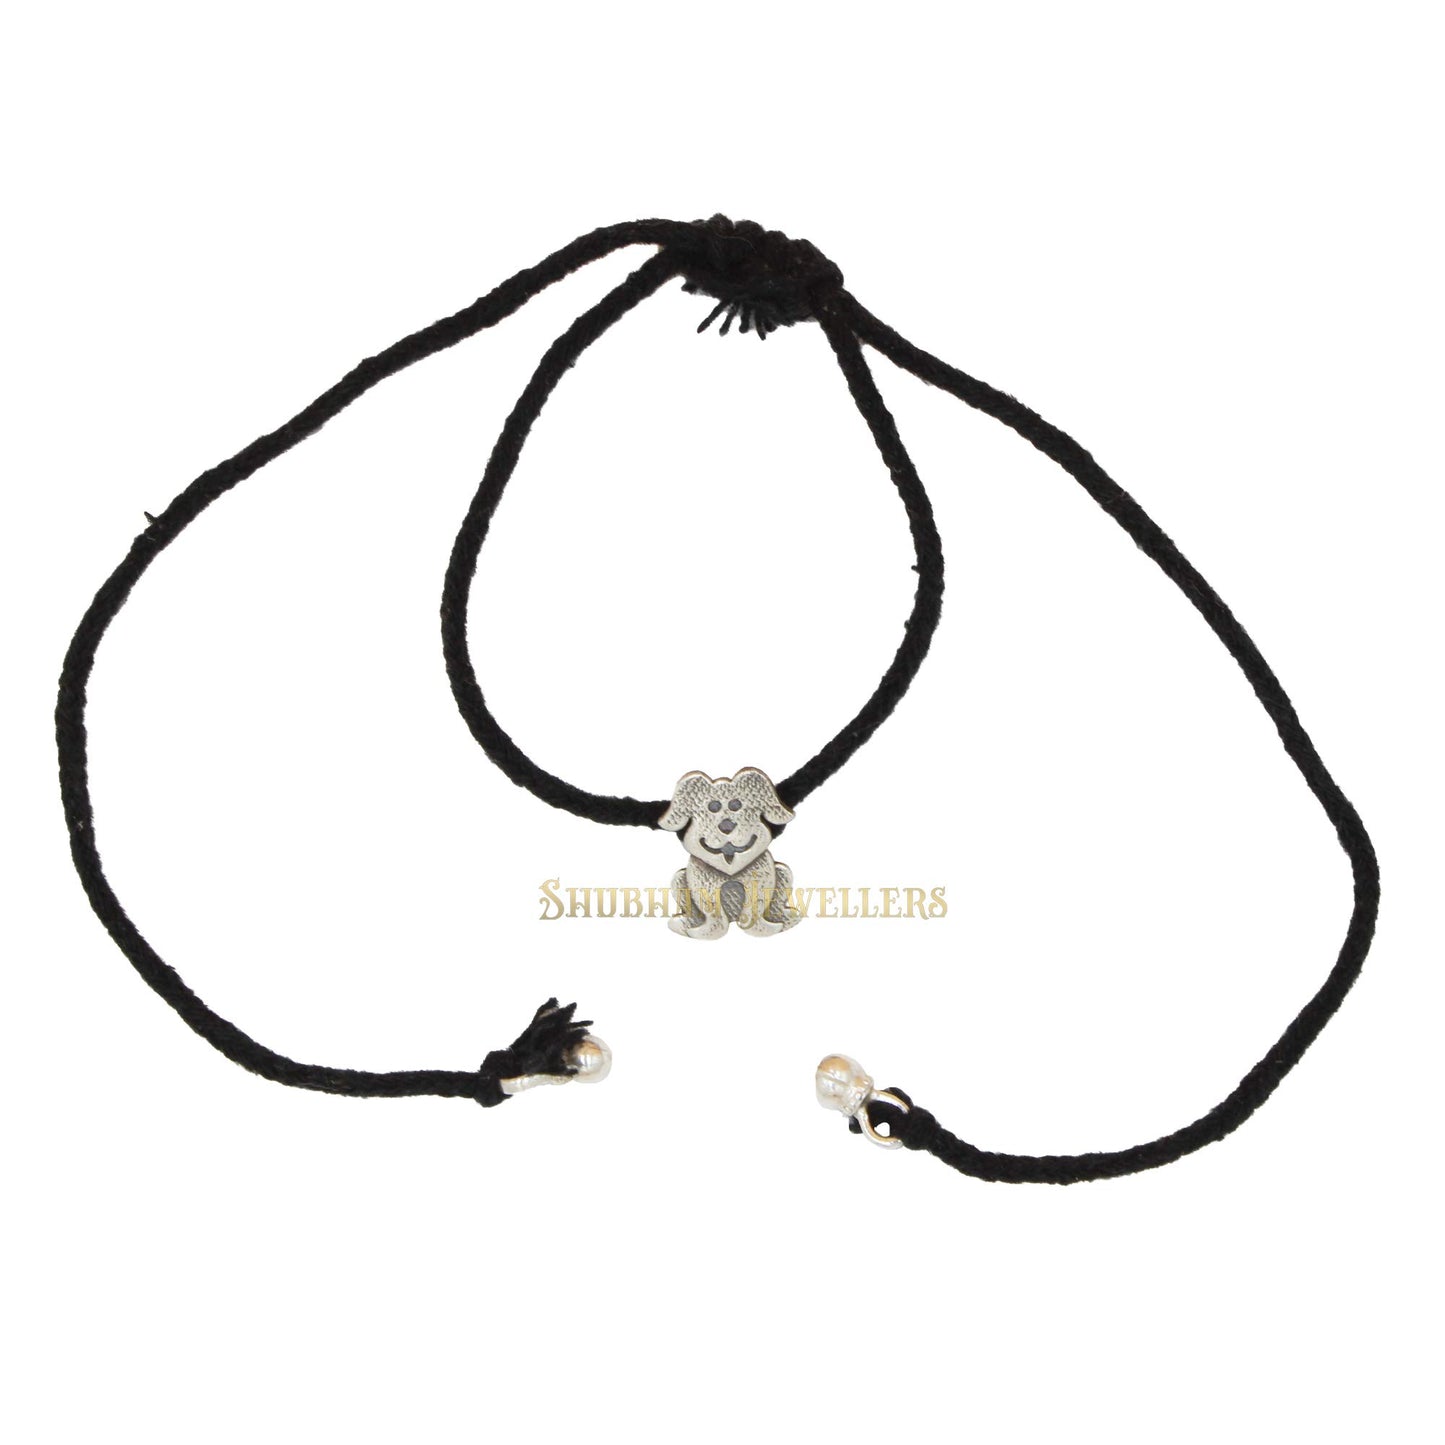 Shubham Jewellers Rehti 925 Oxidised Silver Black Thread DOG Nazarbattu/Nazaiya Anklet/Bracelet for Girls, Women and Children with Silver Ghunghroo